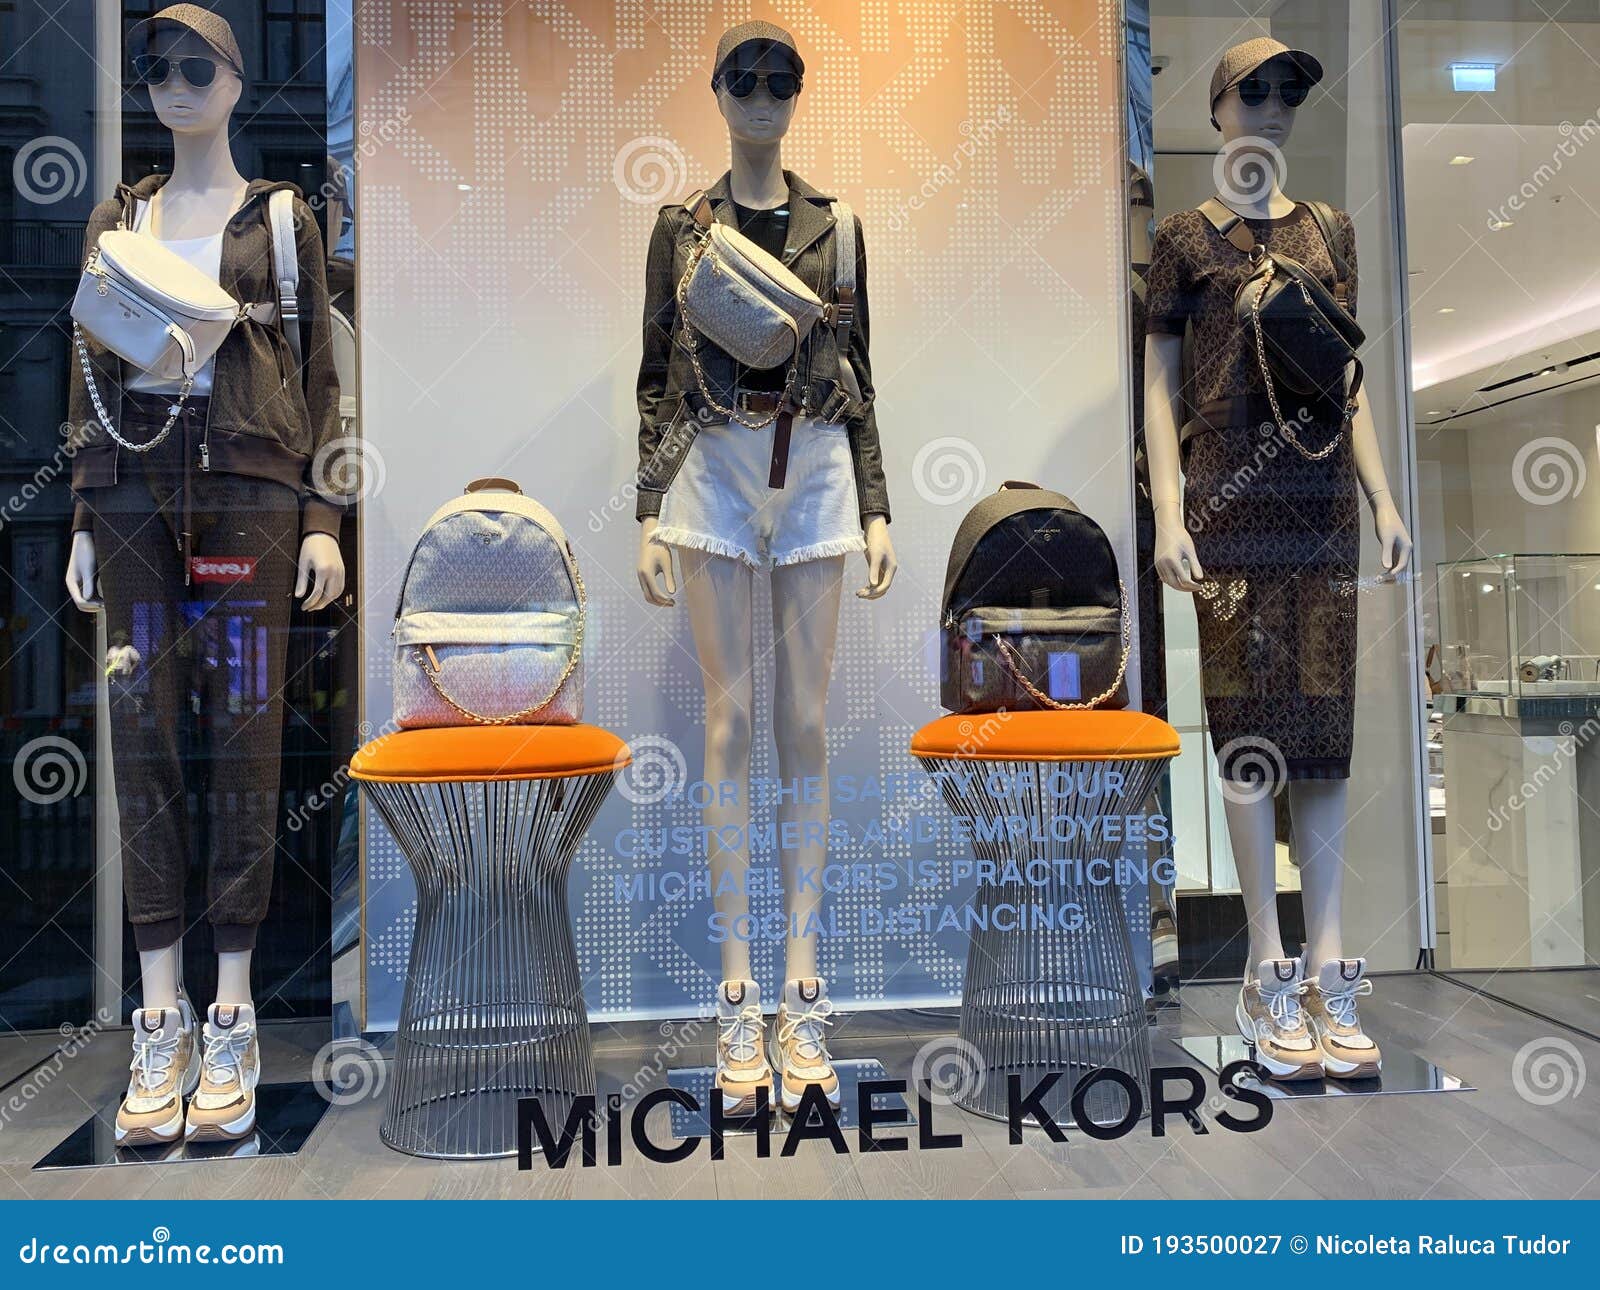 Michael Kors Luxury Fashion Store in Regent Street London England 2020  Editorial Photography - Image of designed, eyeglasses: 193500027